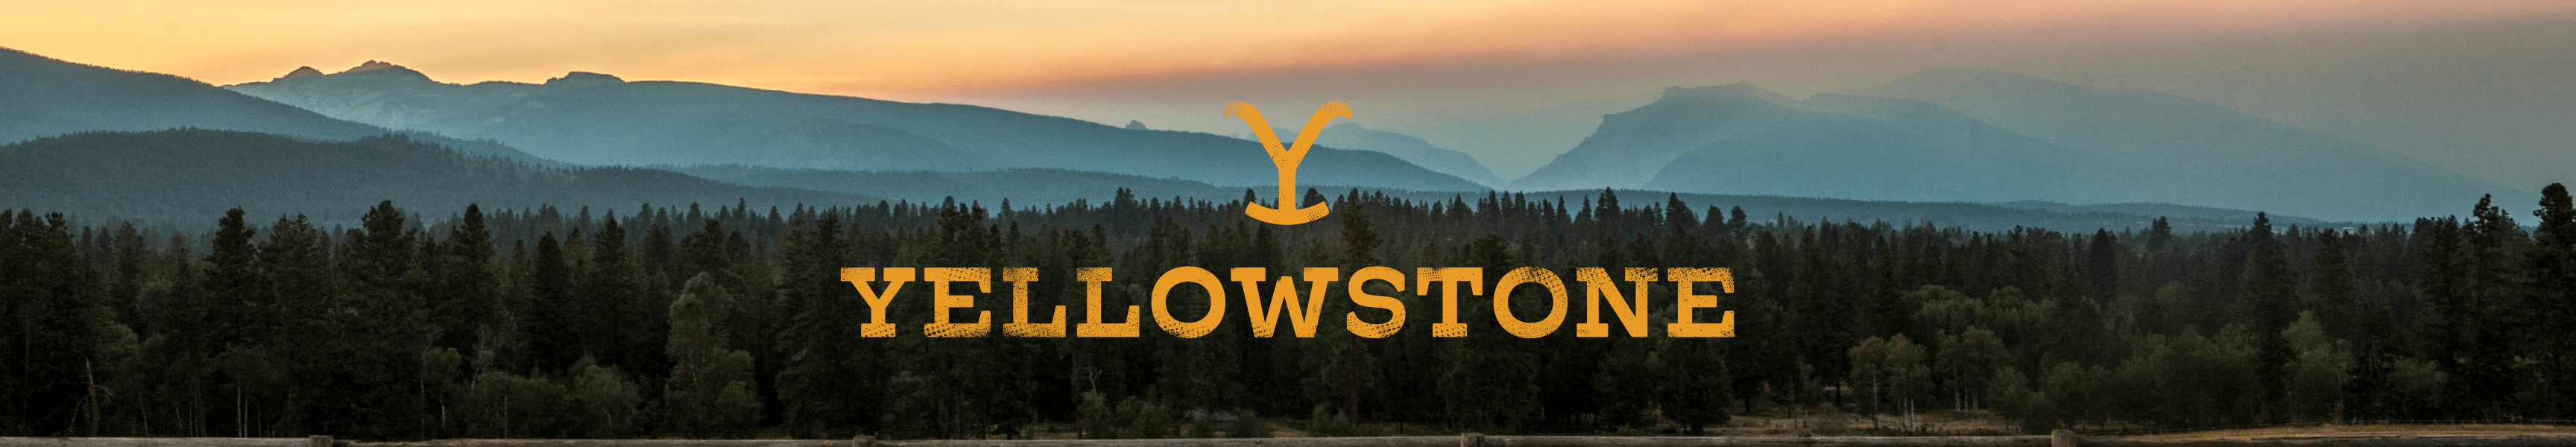 Yellowstone Maison et bureau